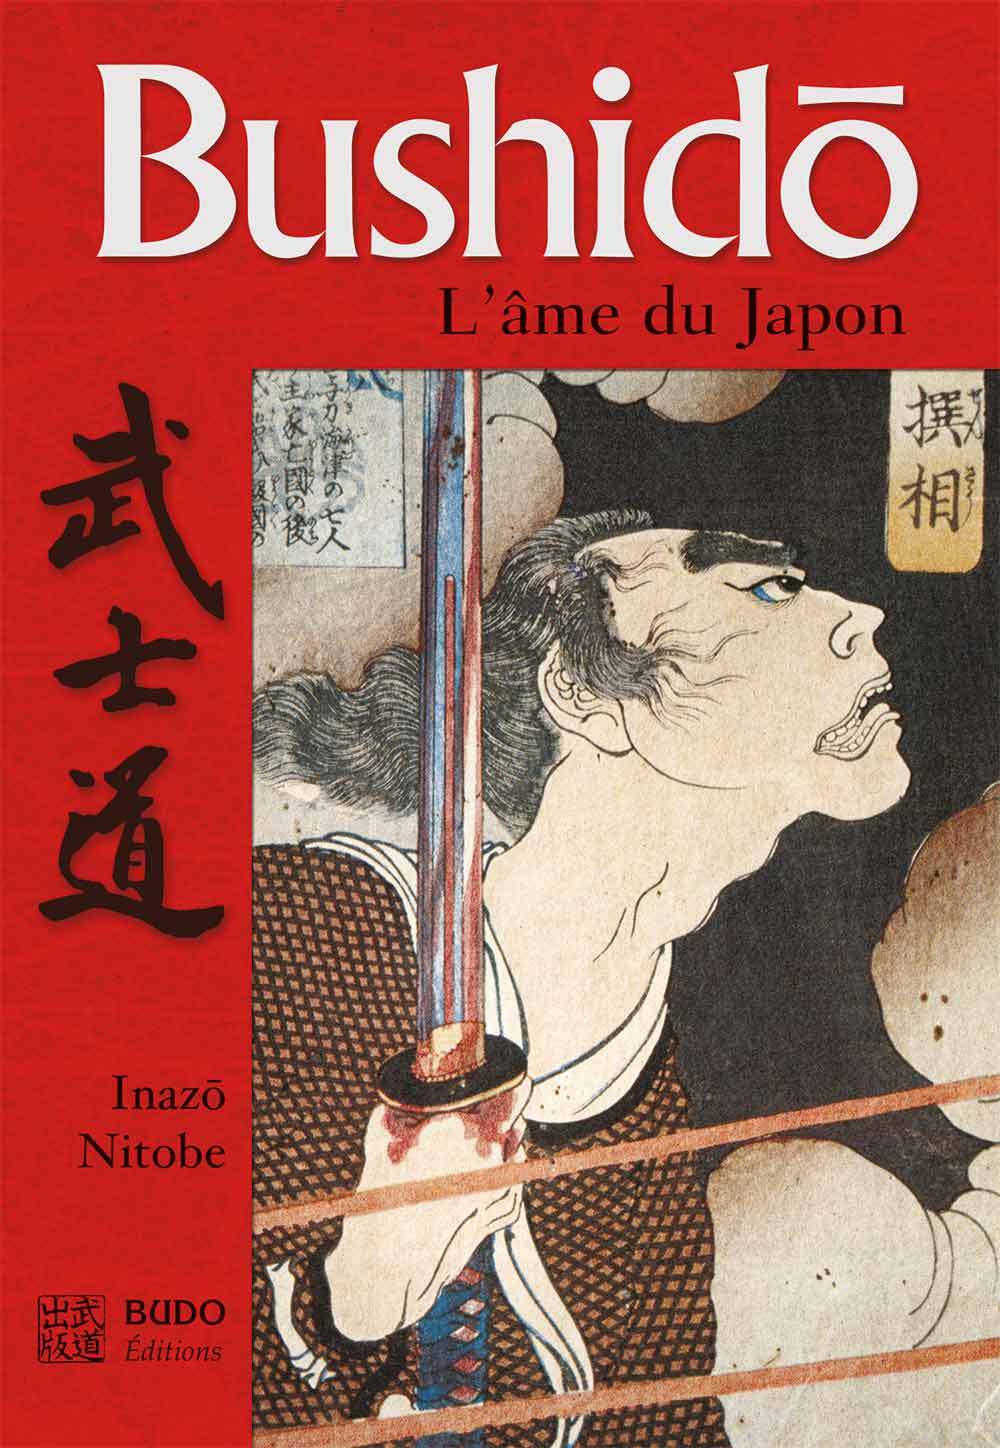 Book Bushido, l'âme du japon NITOBE